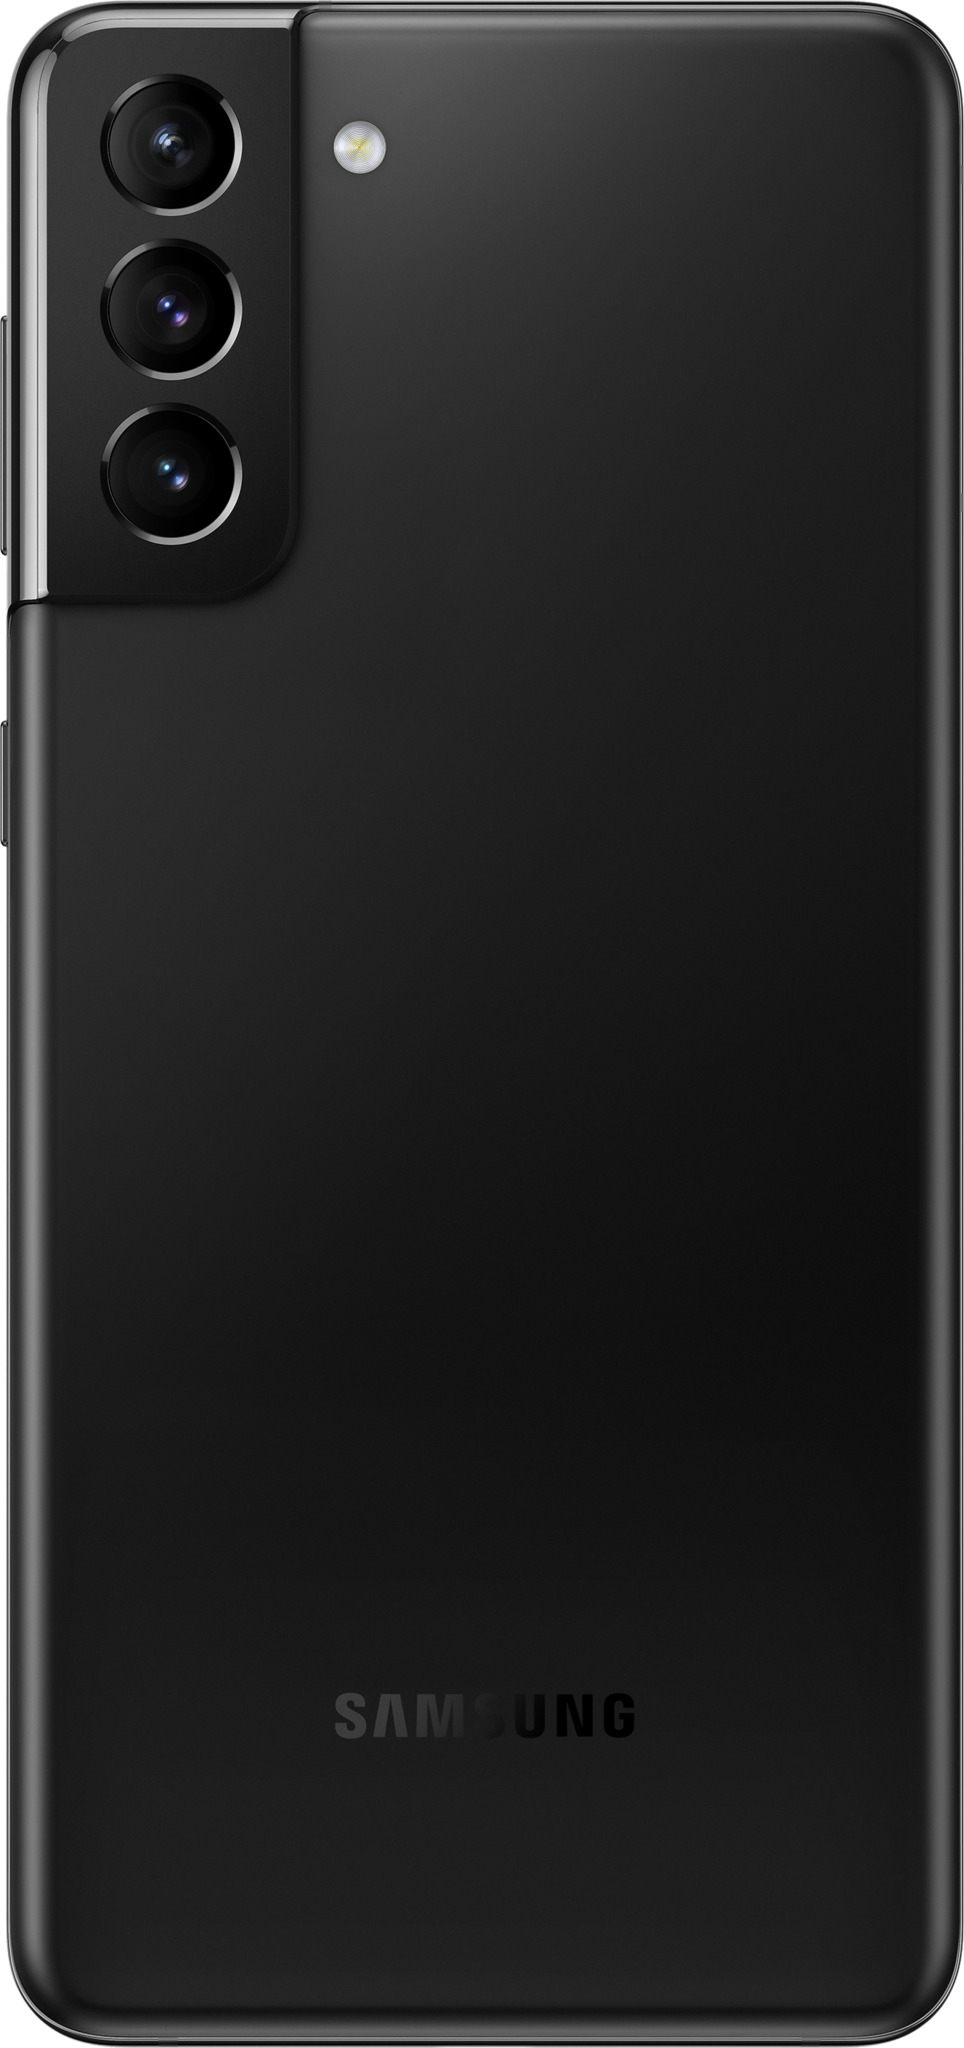 Samsung Galaxy S21 Plus Render Phantom Black Back Official